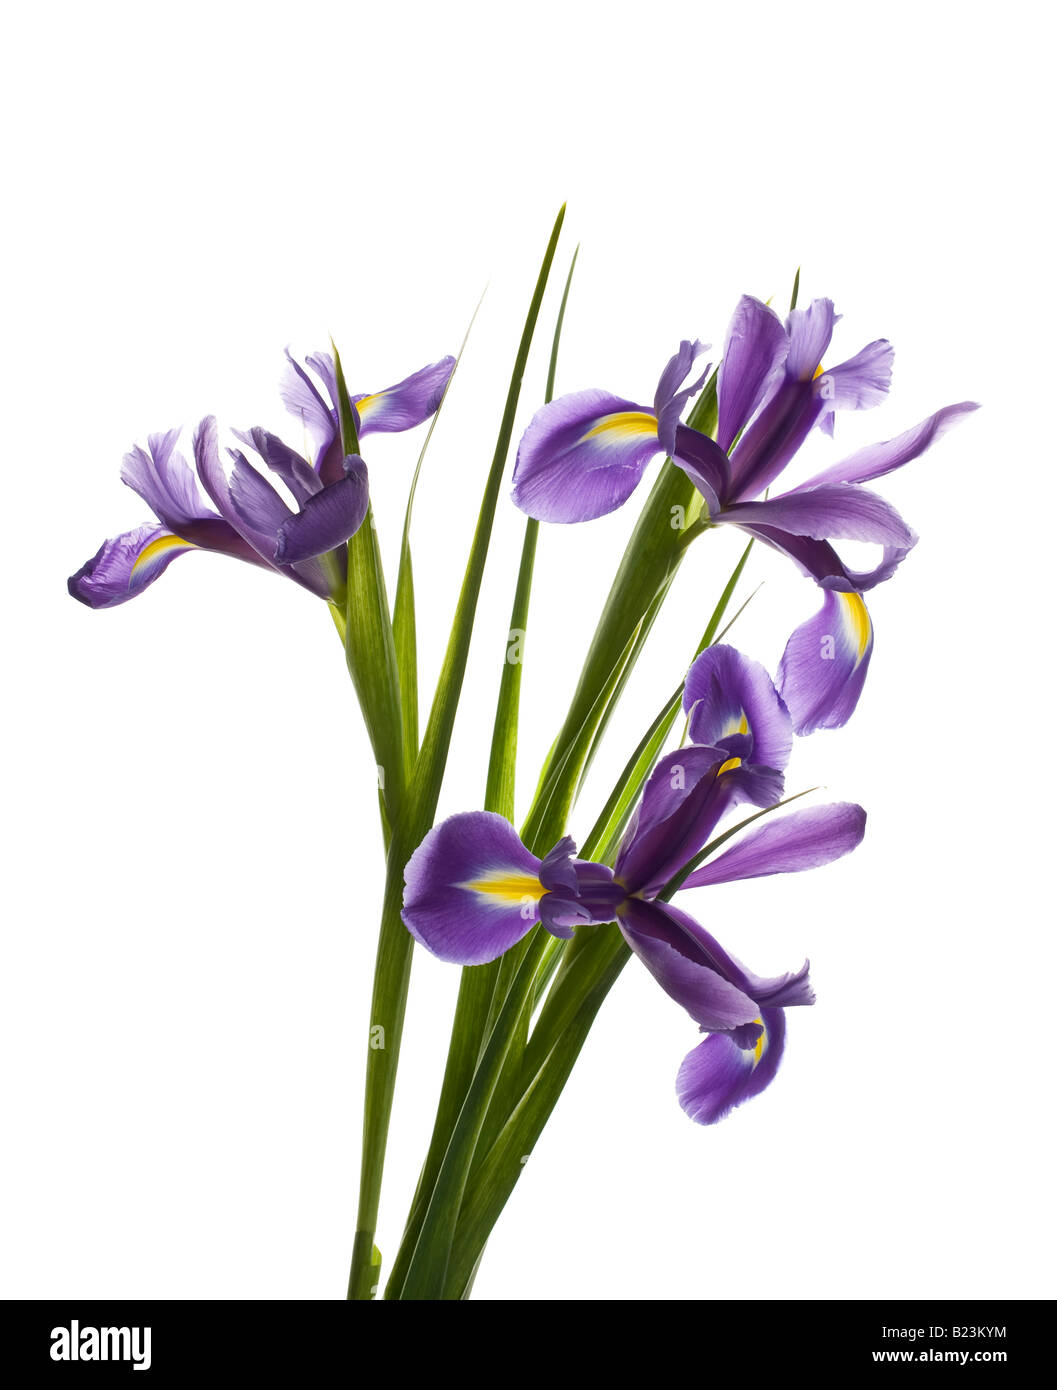 Bunch of Irises against white background Stock Photo